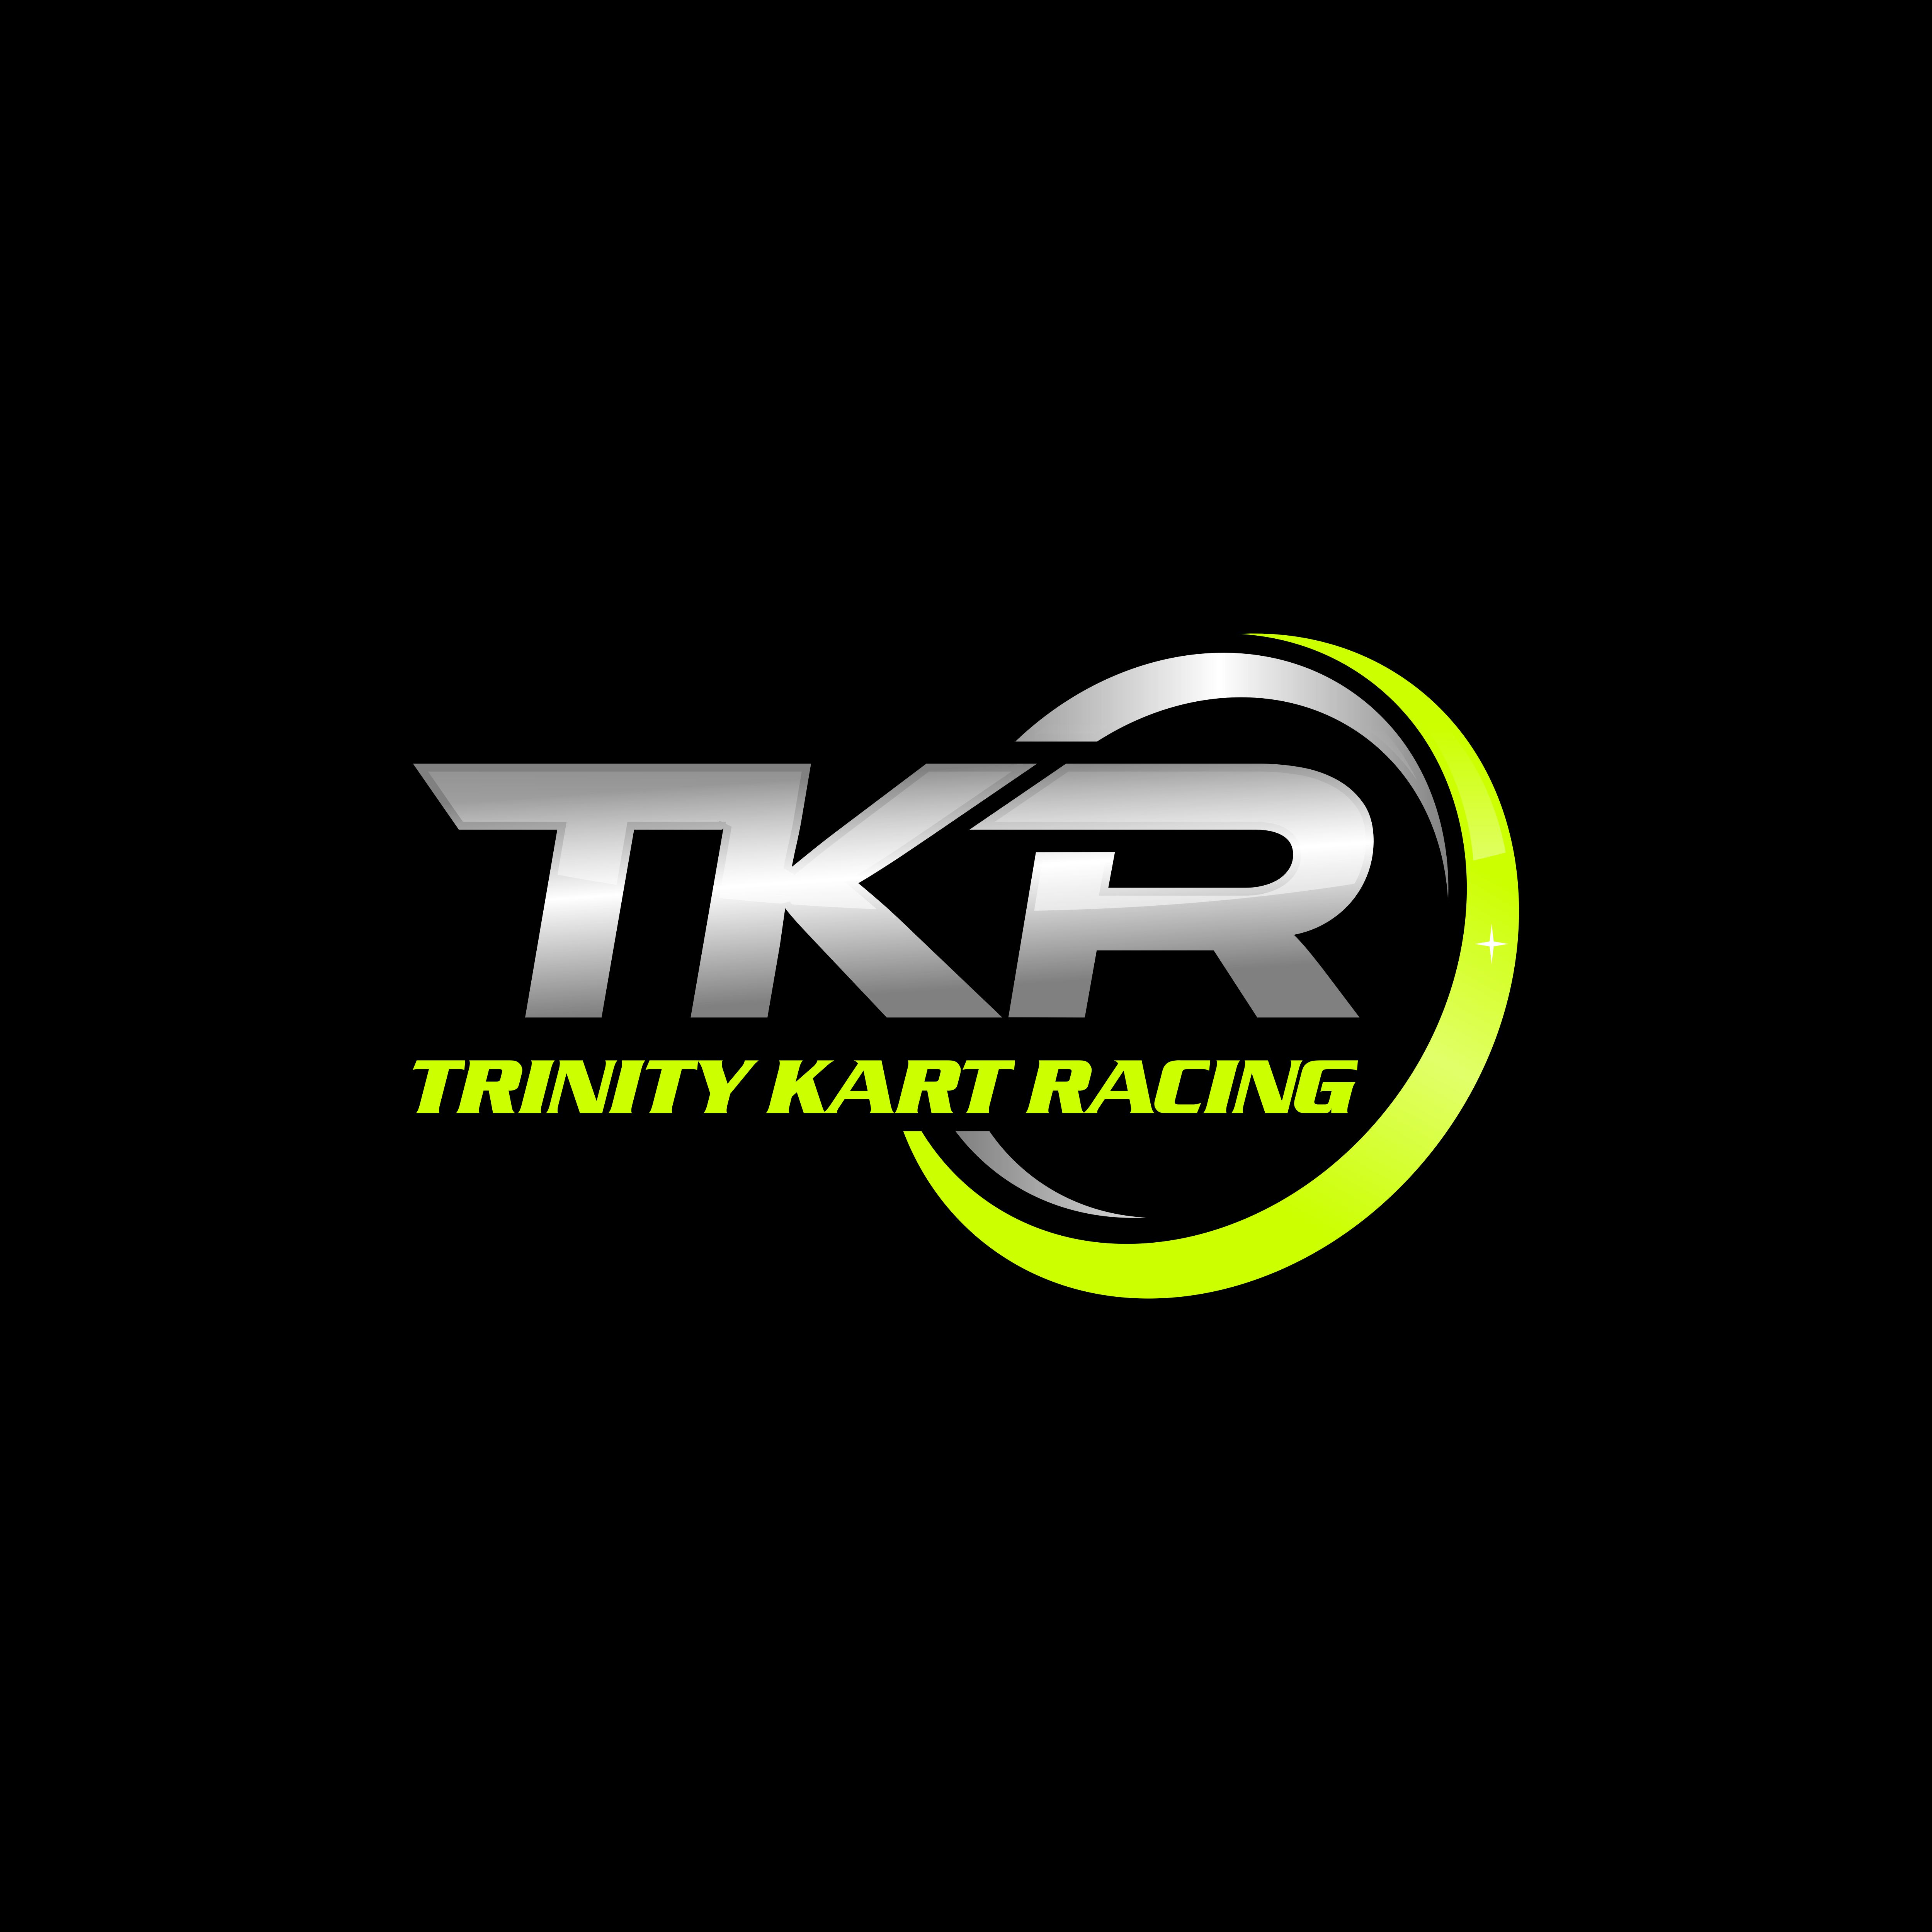 Gambar Logo Tkr - KibrisPDR